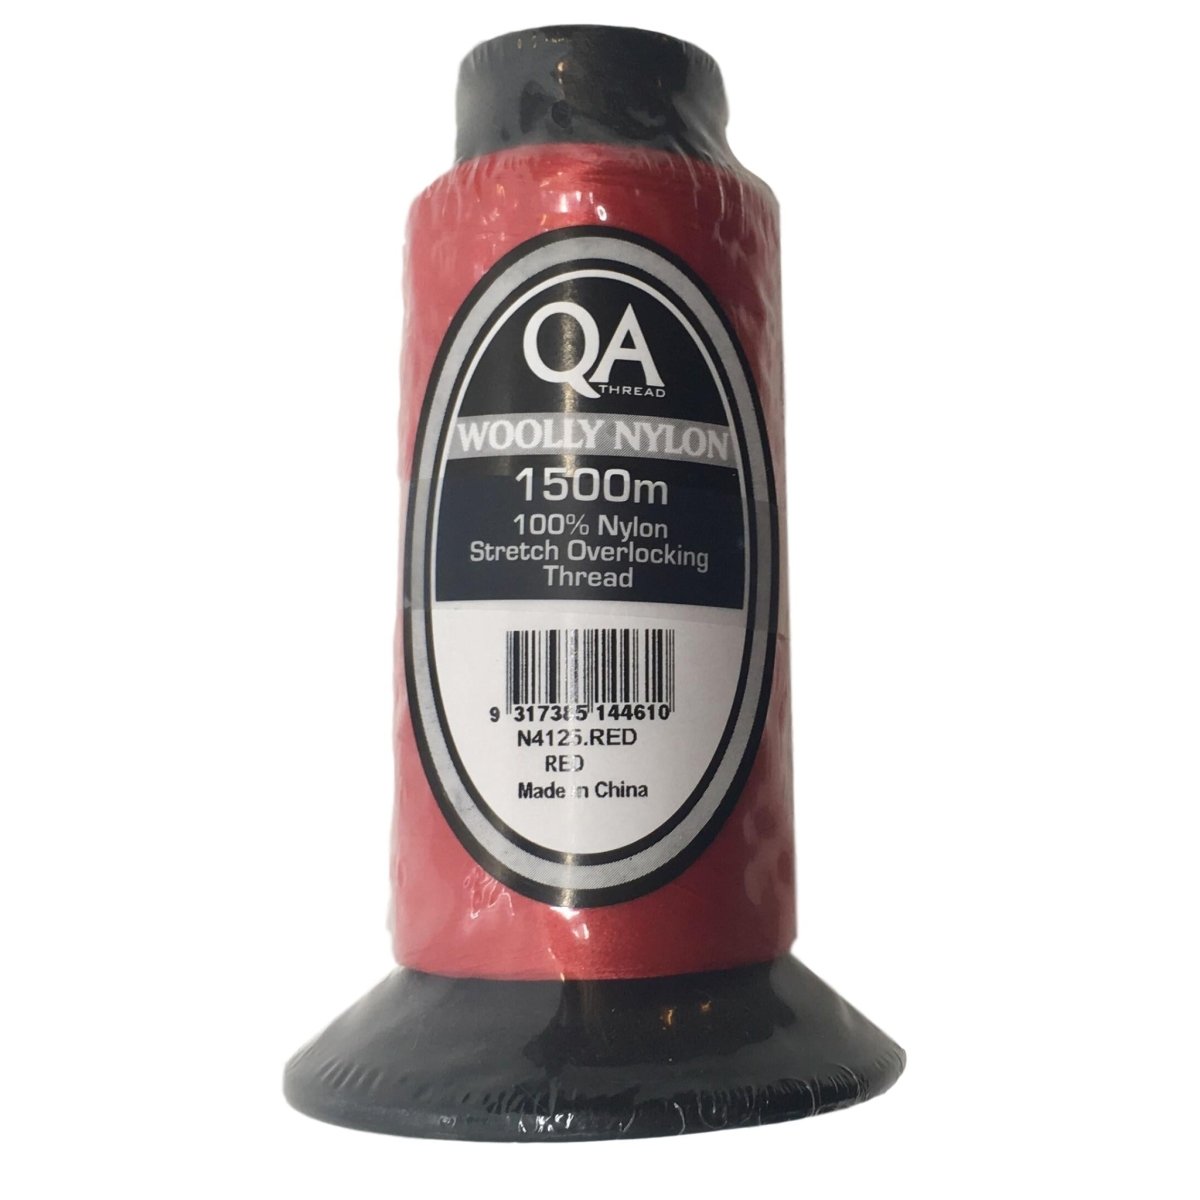 QA Woolly Nylon Thread - 1500m - Assorted Colours - Sewing Gem